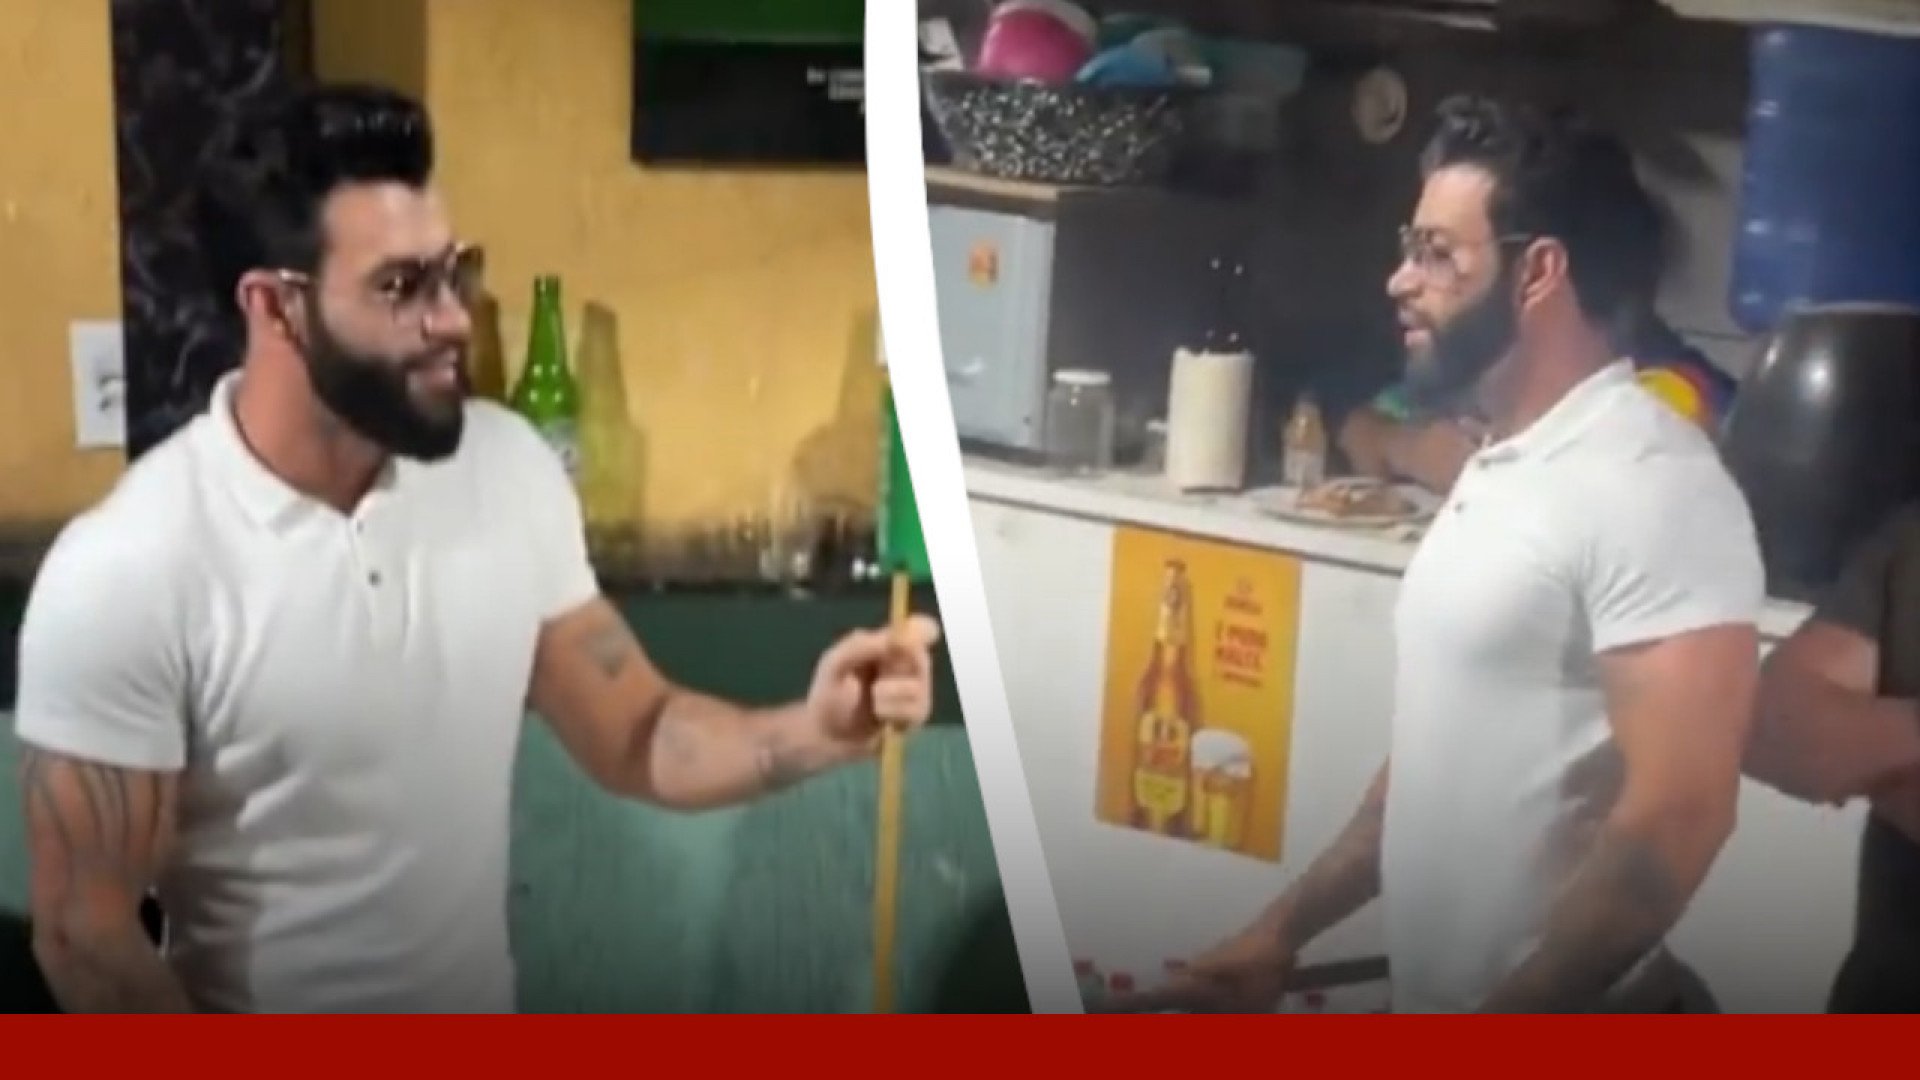 Vídeo: Gusttavo Lima surpreende fãs ao jogar sinuca em bar de